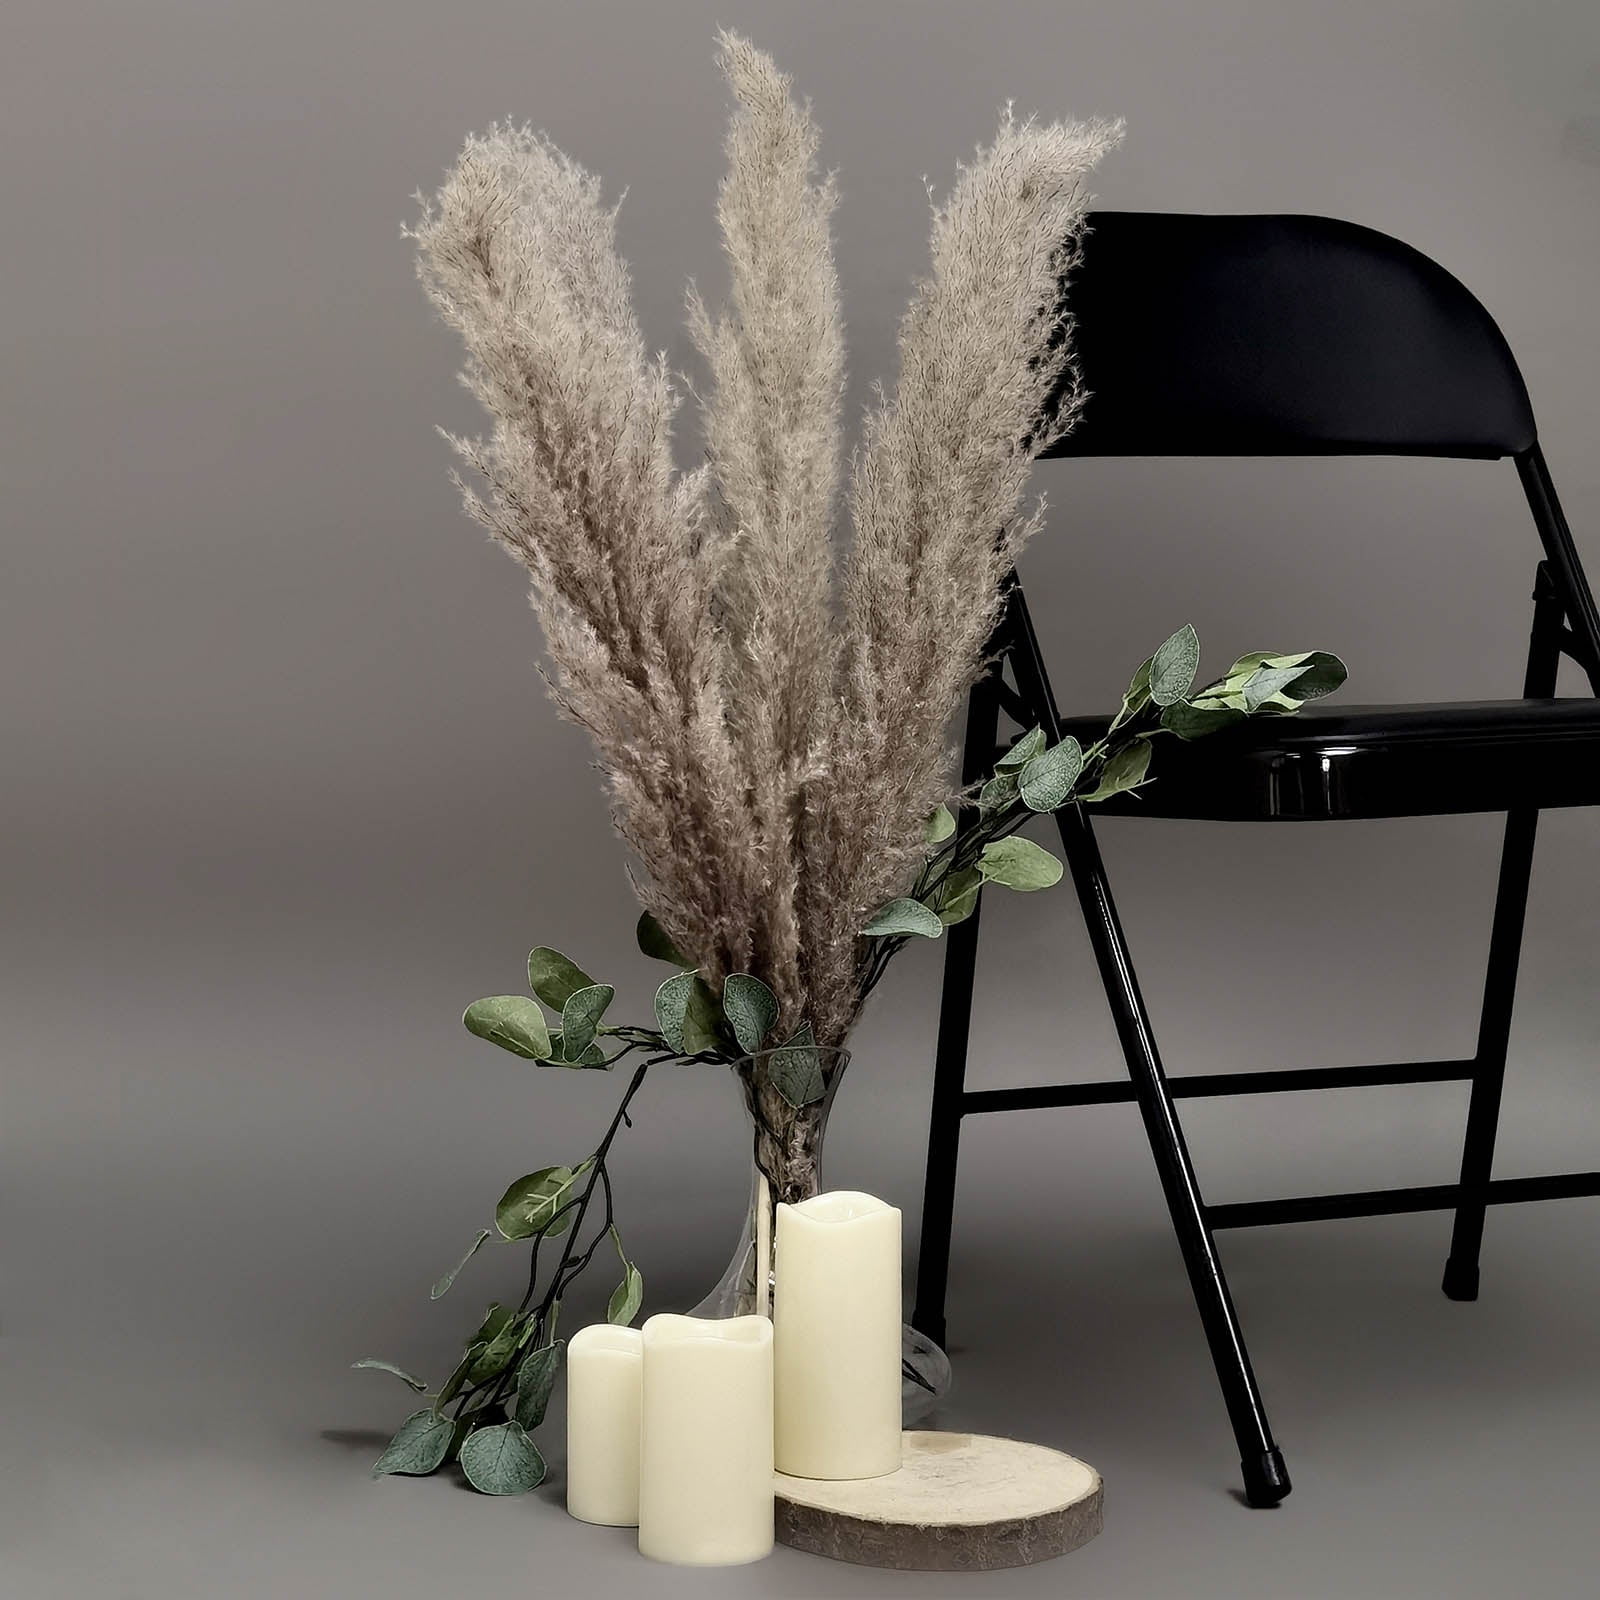 3 Stems | 44 Black Artificial Pampas Grass Plant Sprays, Faux Branches Vase Flower Arrangement | by Tableclothsfactory